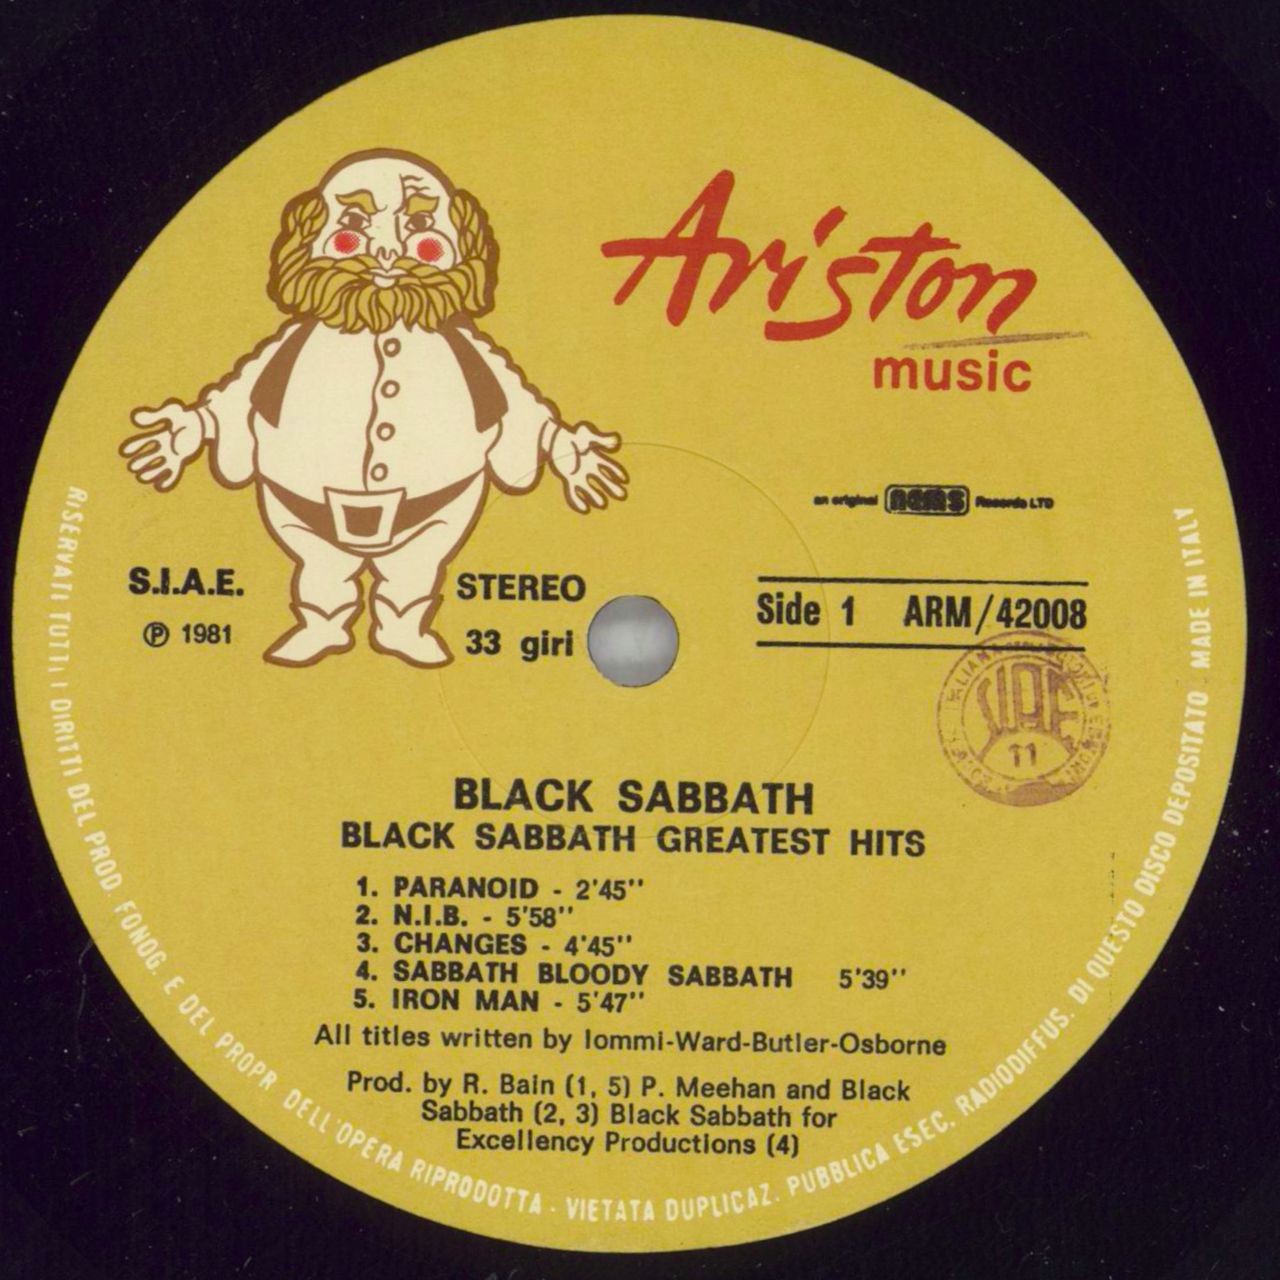 Black Sabbath Greatest Hits 2 Vinilo Nuevo Ozzy Osbourn